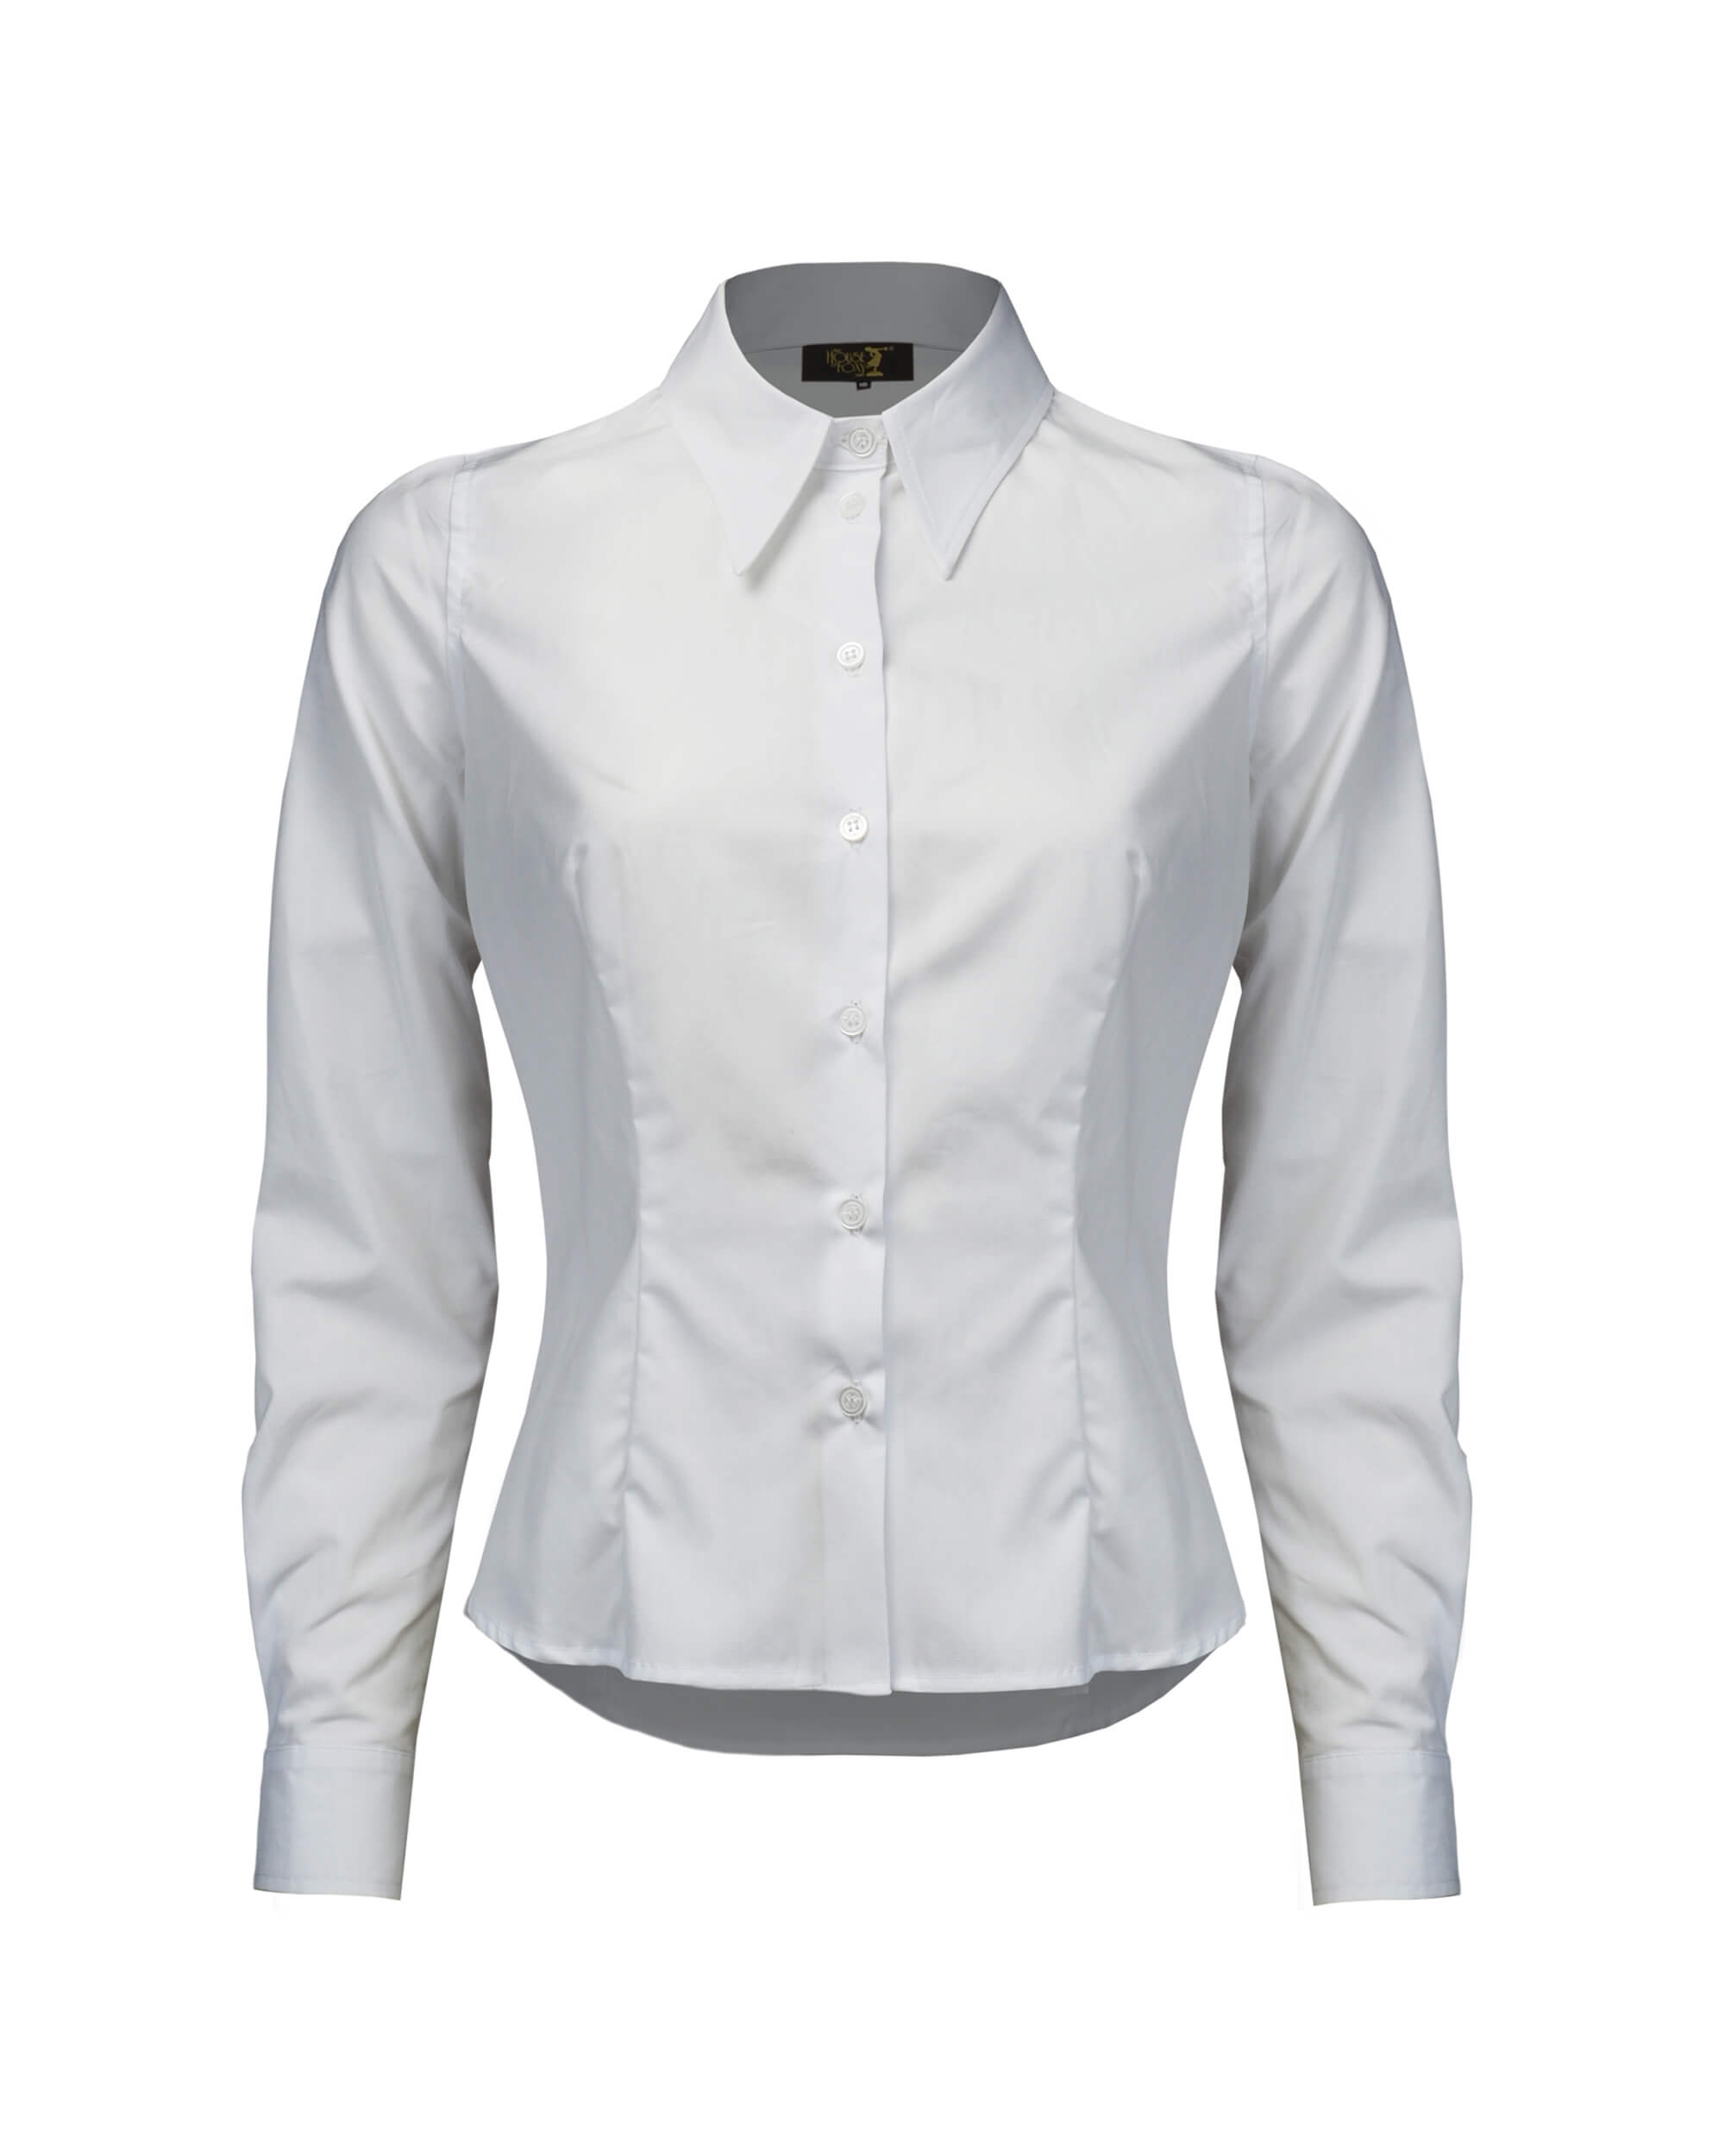 Spearpoint Collar Shirt - White